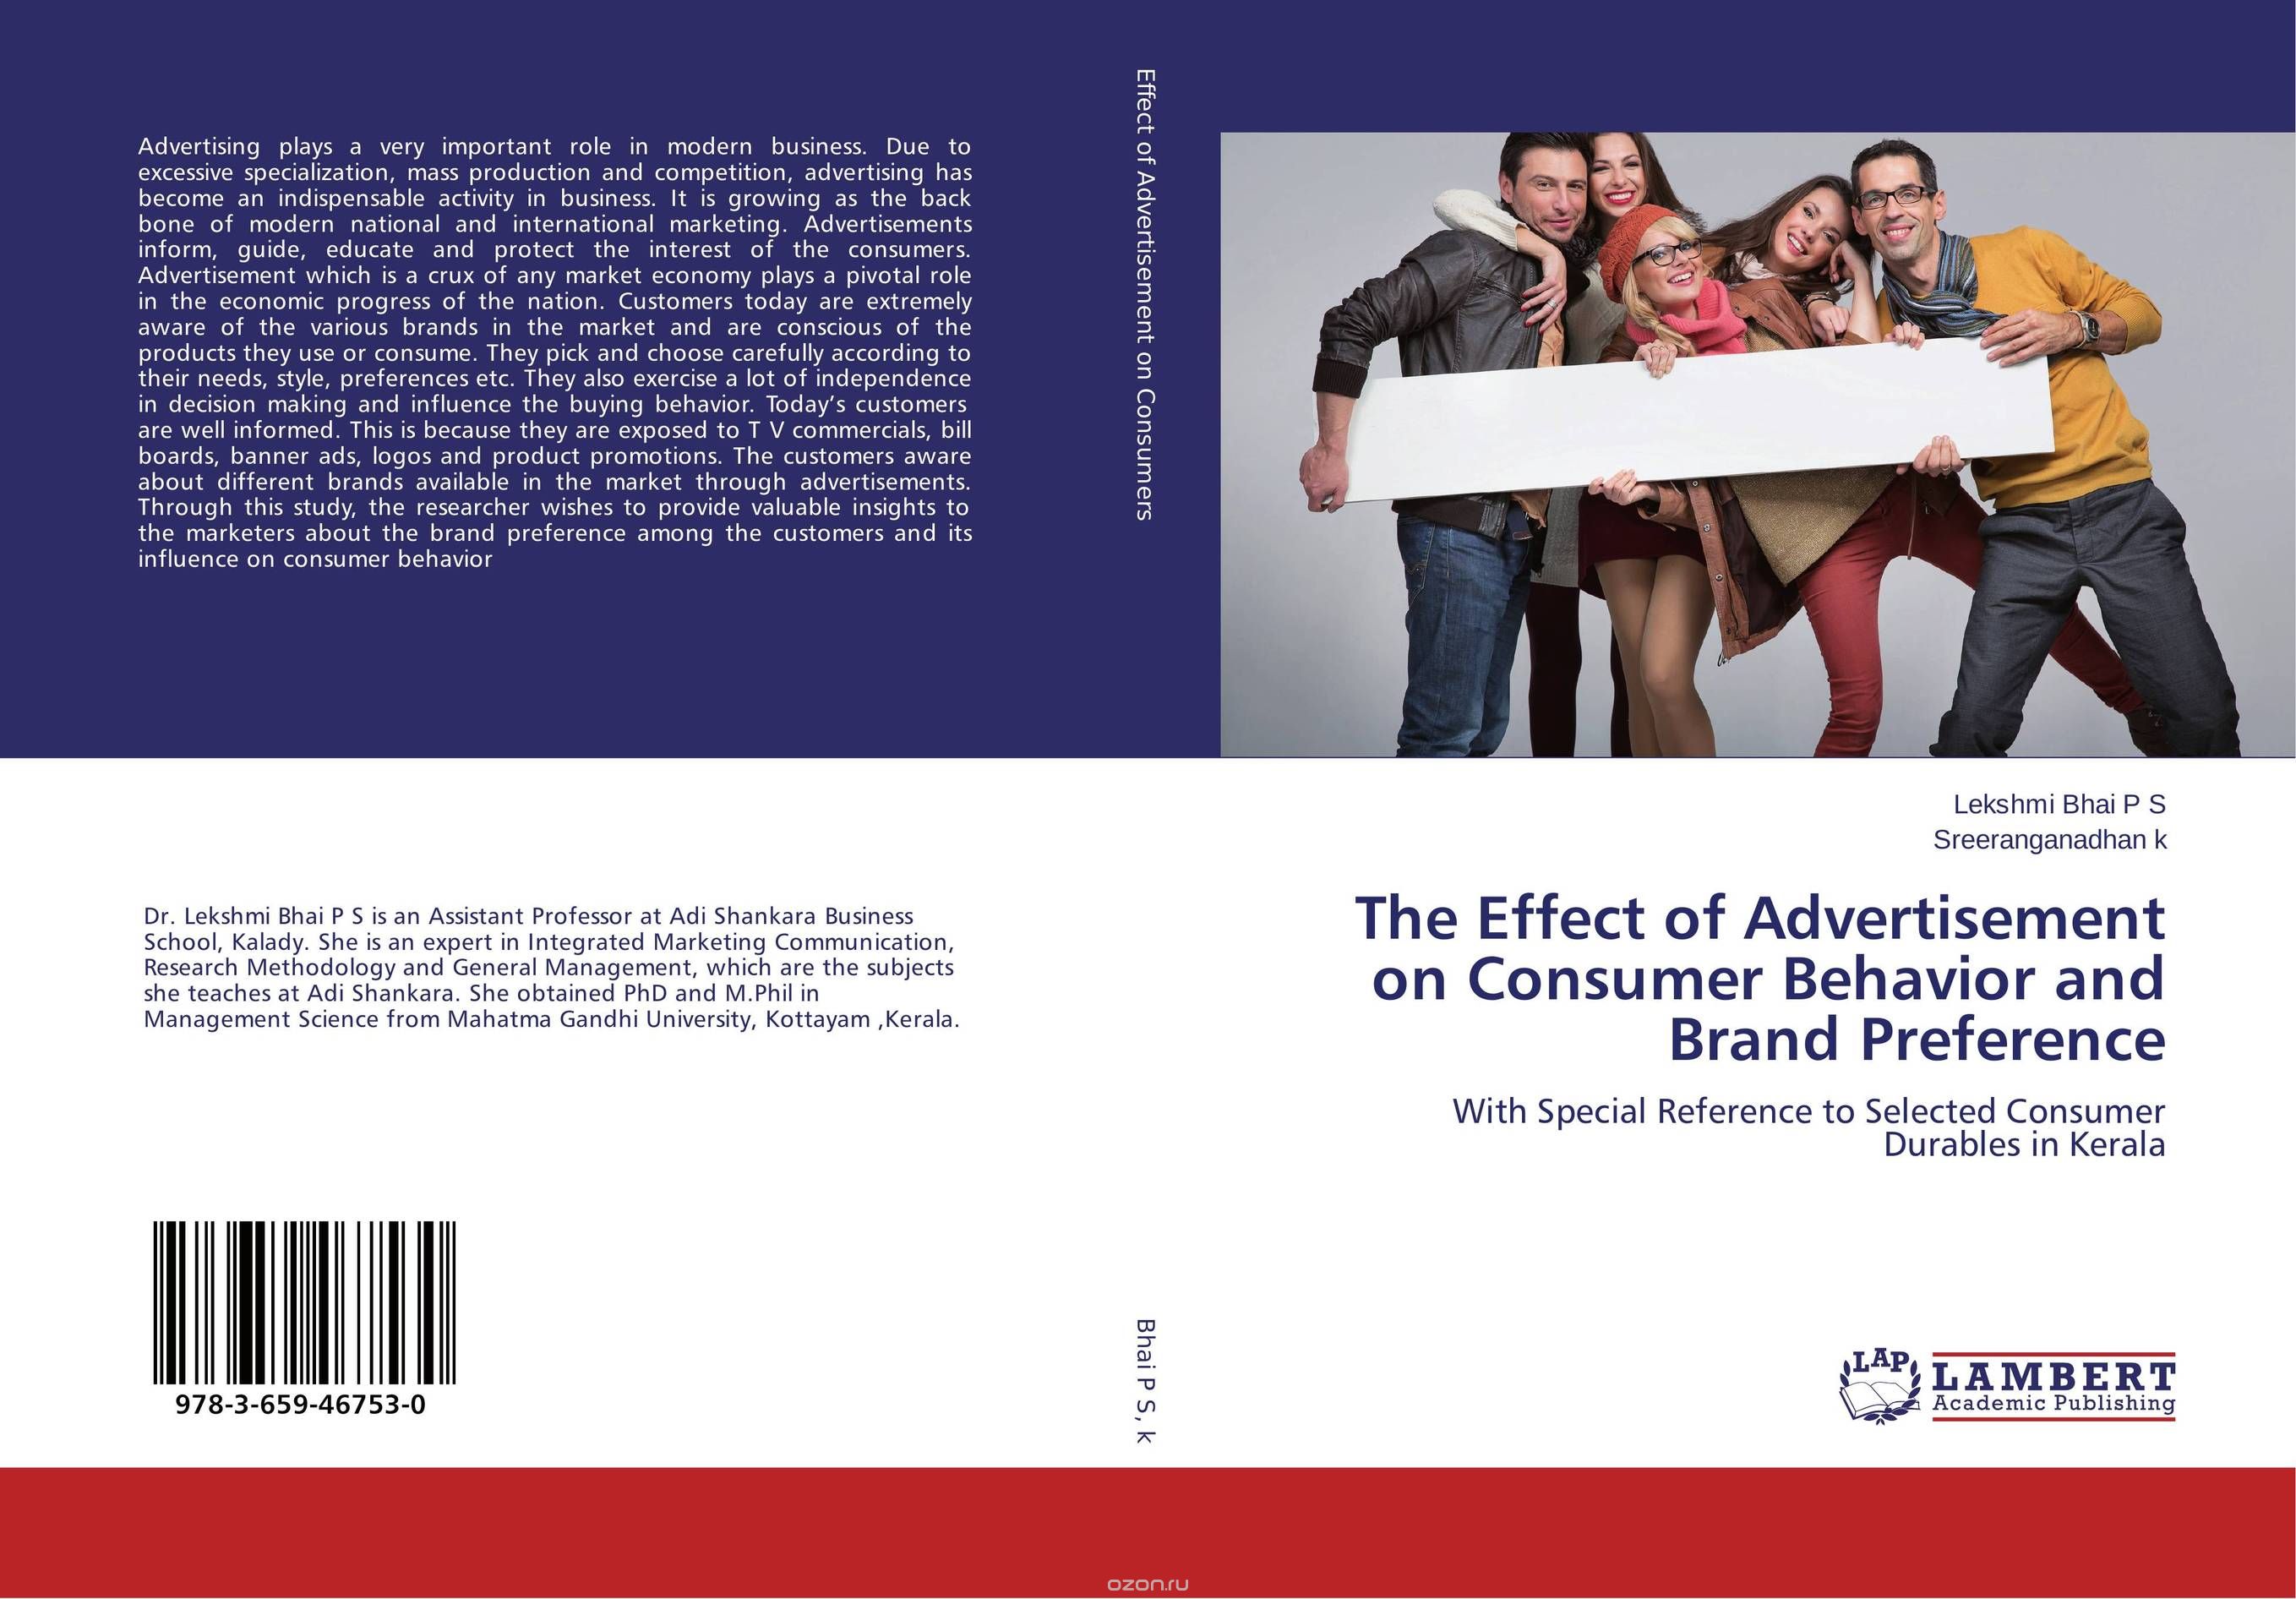 Скачать книгу "The Effect of Advertisement on Consumer Behavior and Brand Preference"